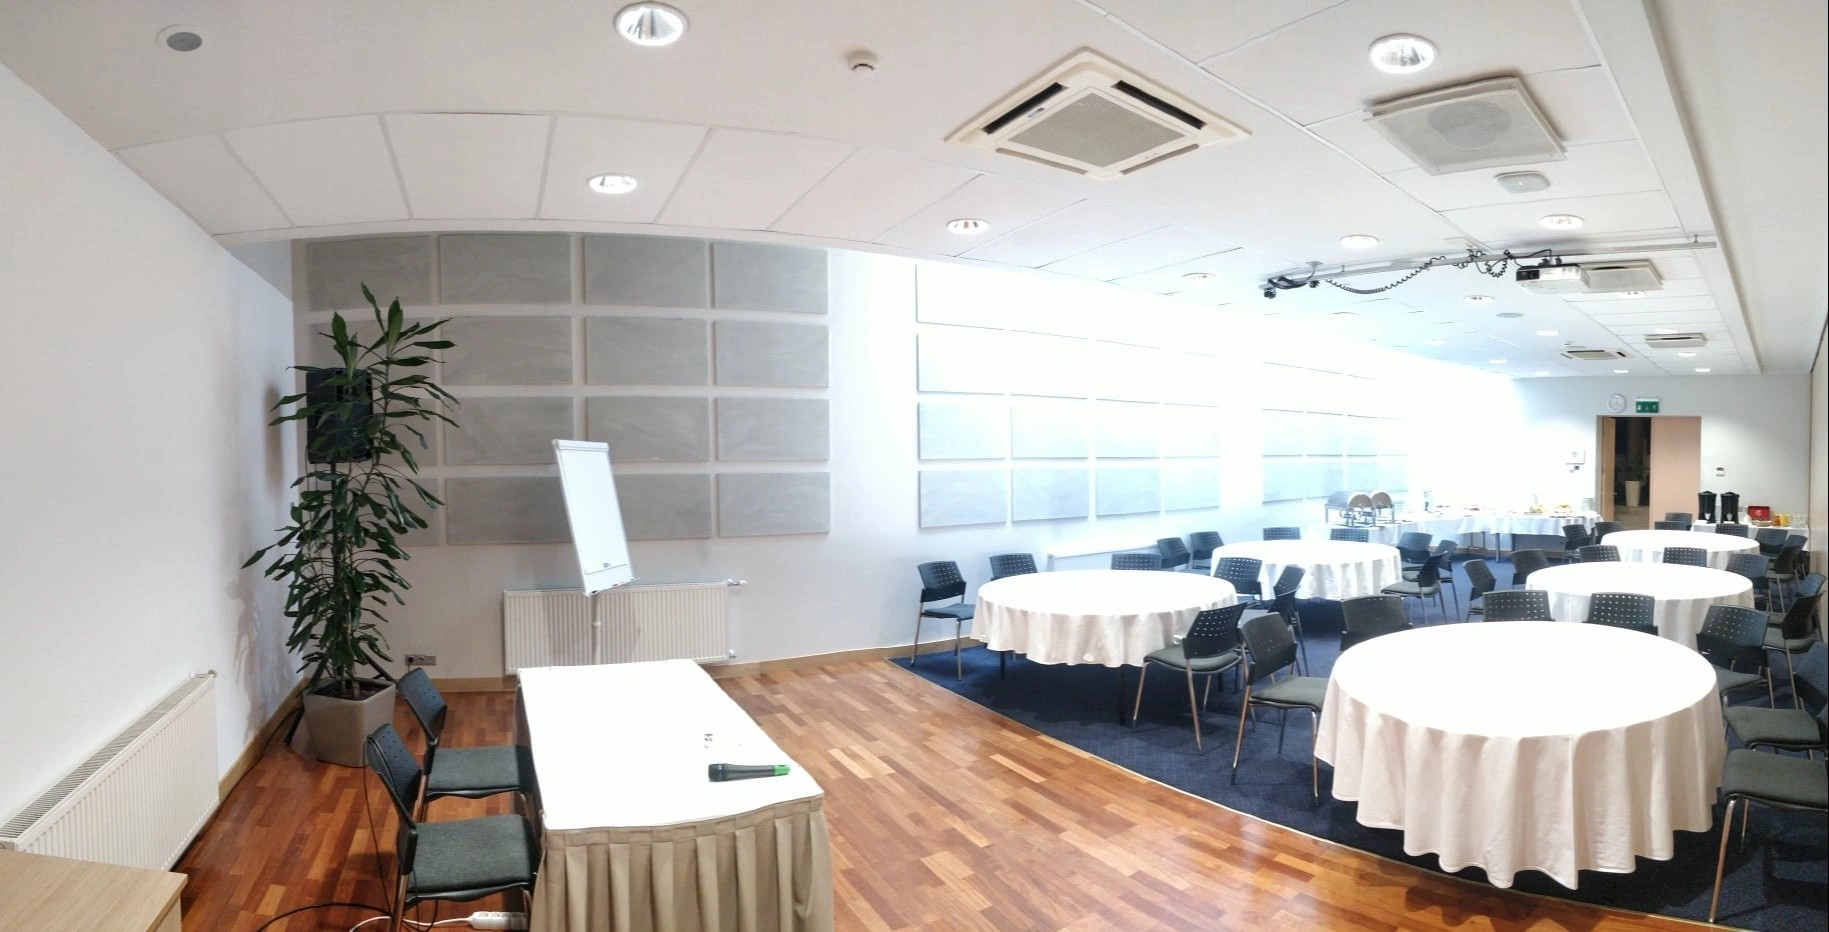 Konferenču telpas | Rīga | Riga Islande Hotel | bilde